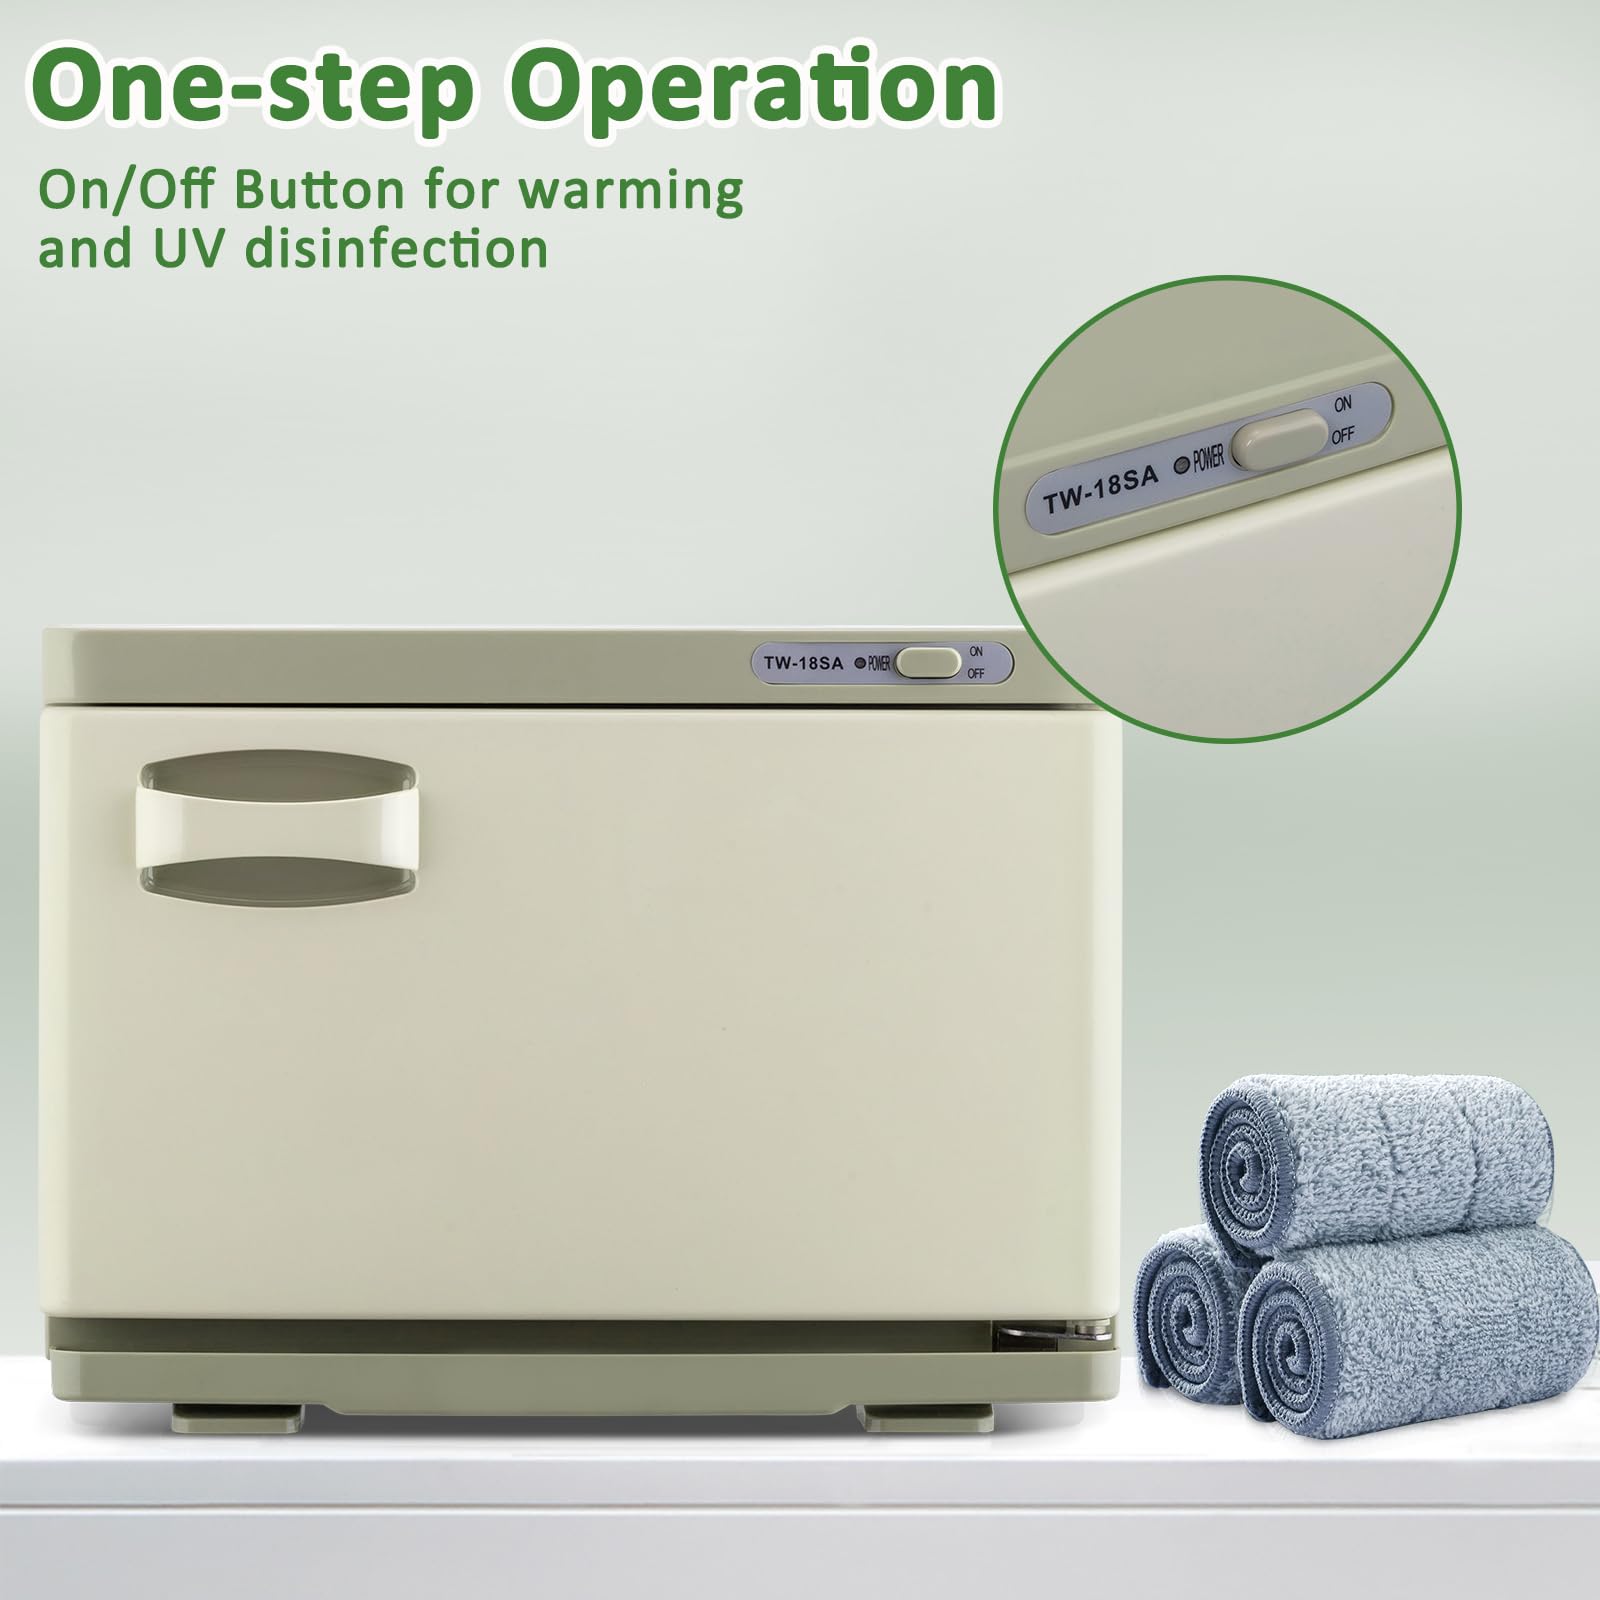 OmySalon 15L Hot Towel Warmer Cabinet for Facials Massage